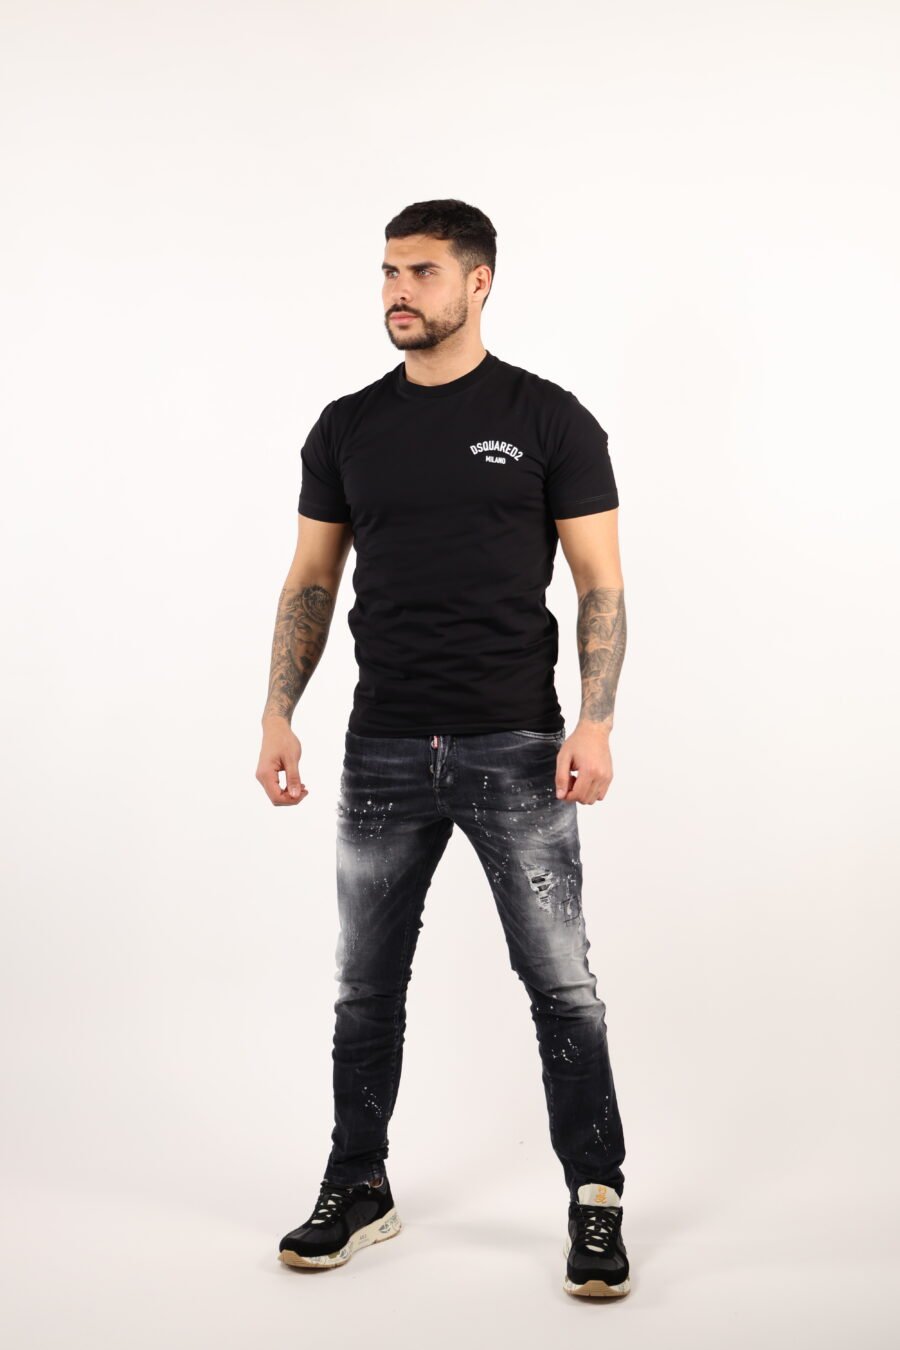 Camiseta negra con logo doblado "milano" - 109199